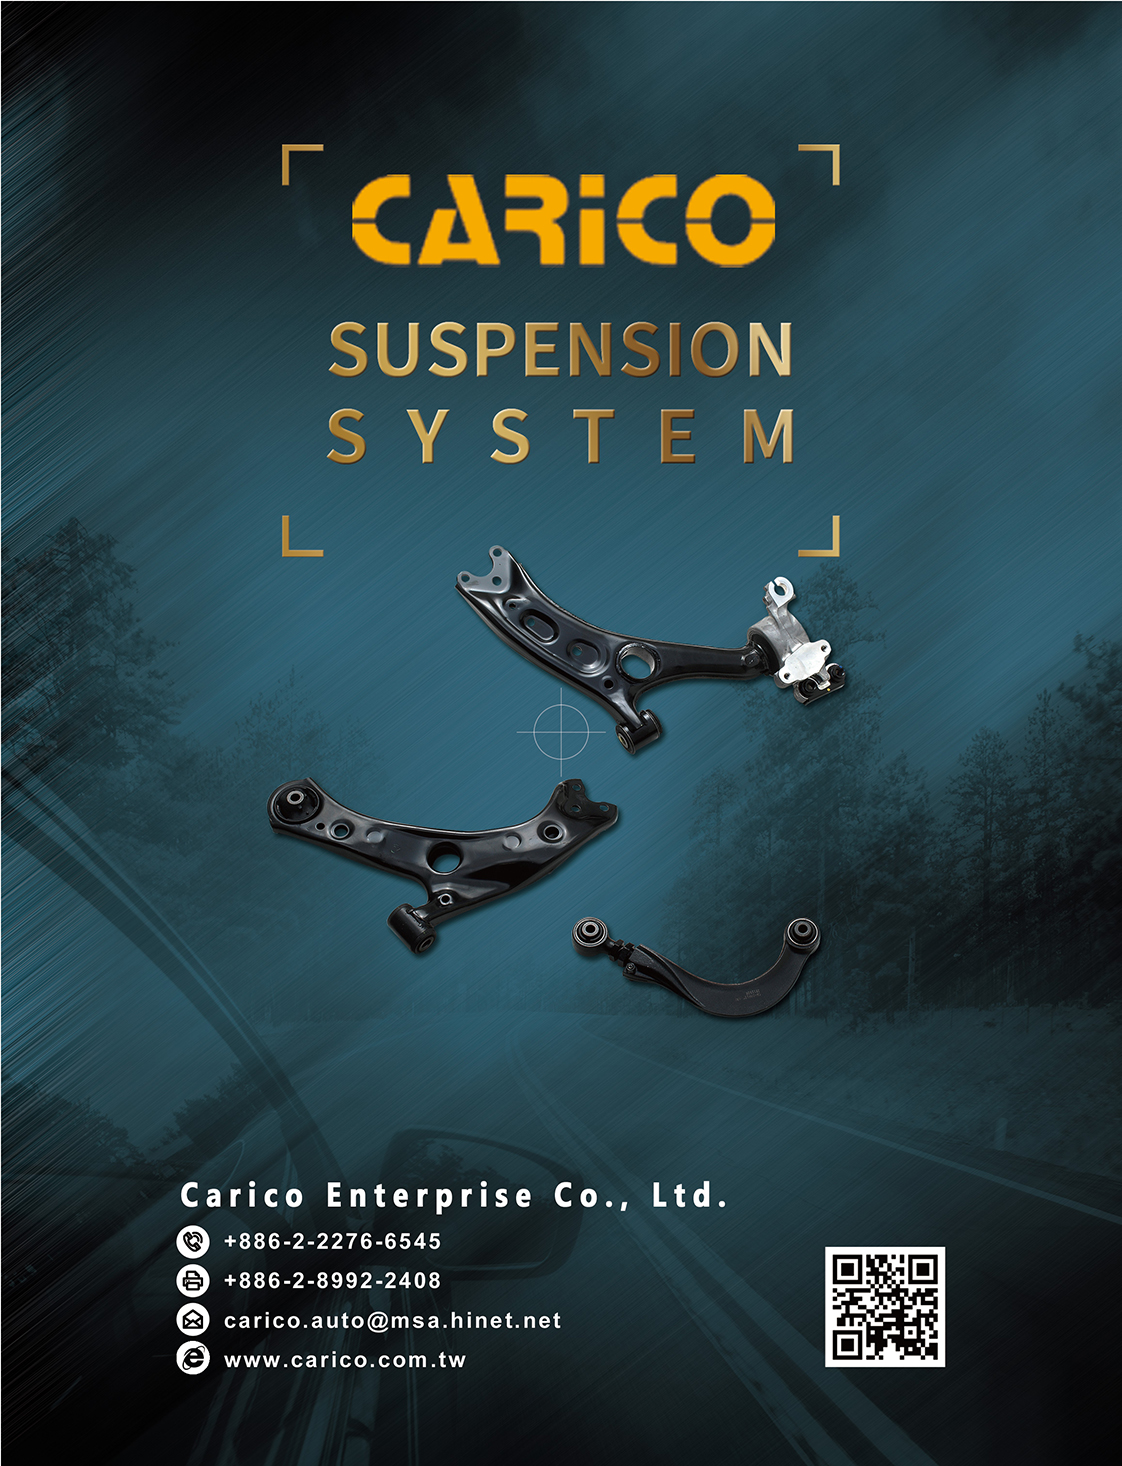 CARICO ENTERPRISE CO., LTD.